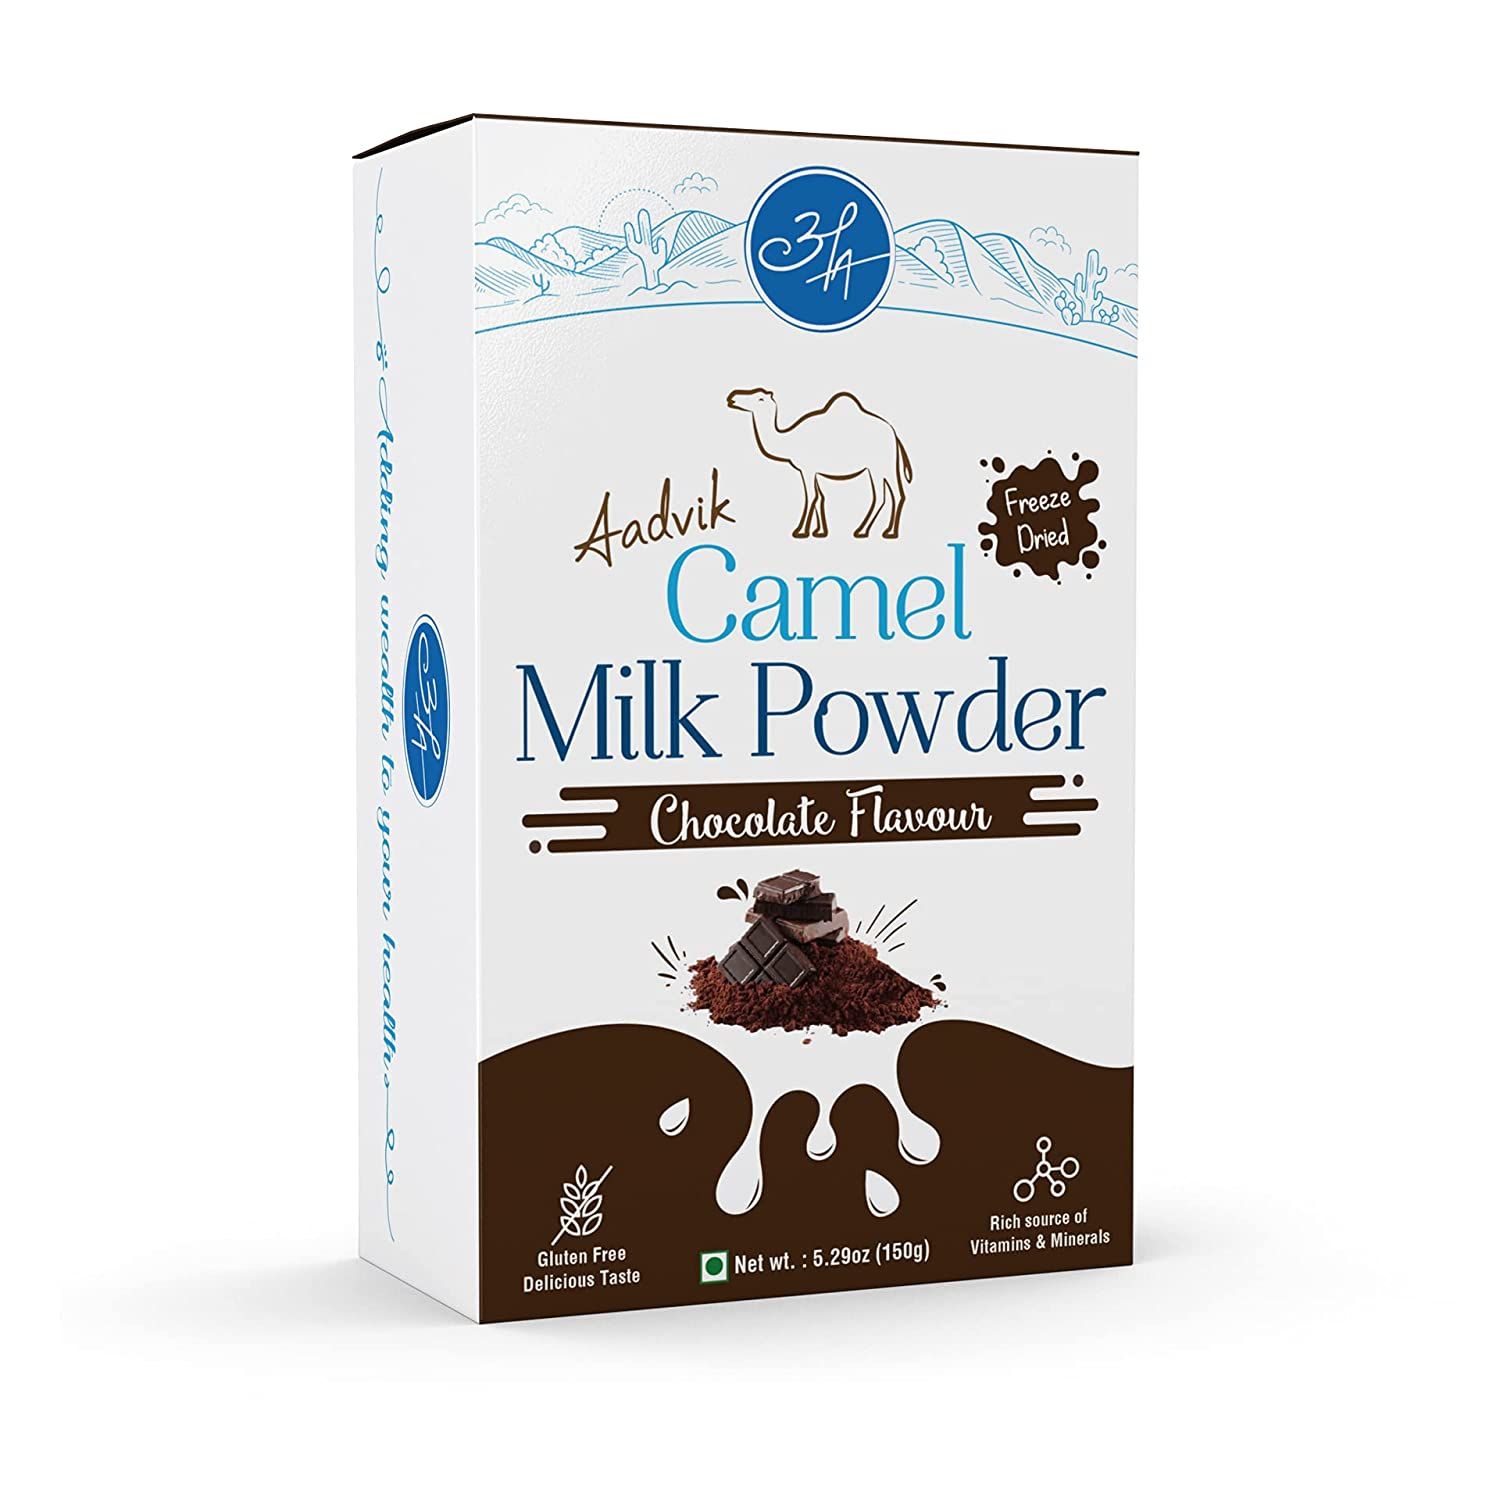 Aadvik Camel Chocolate Milk Powder Image